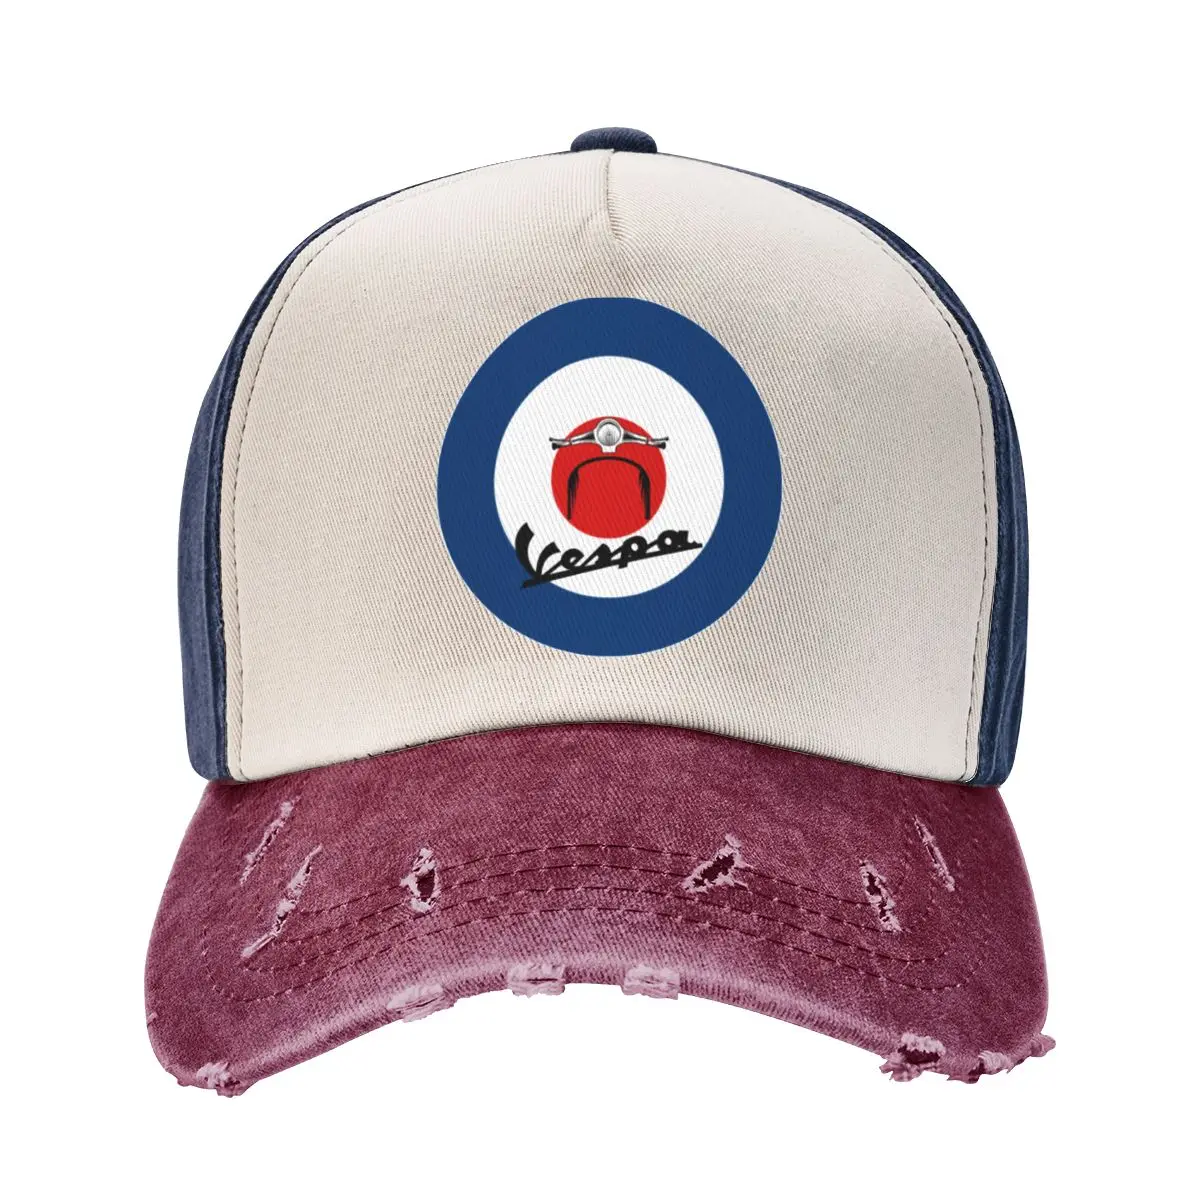 

Piaggio Vespa Scooterist MOD Target Outfit Unisex Baseball Cap Distressed Denim Hats Cap Classic Outdoor Summer Gift Casquette